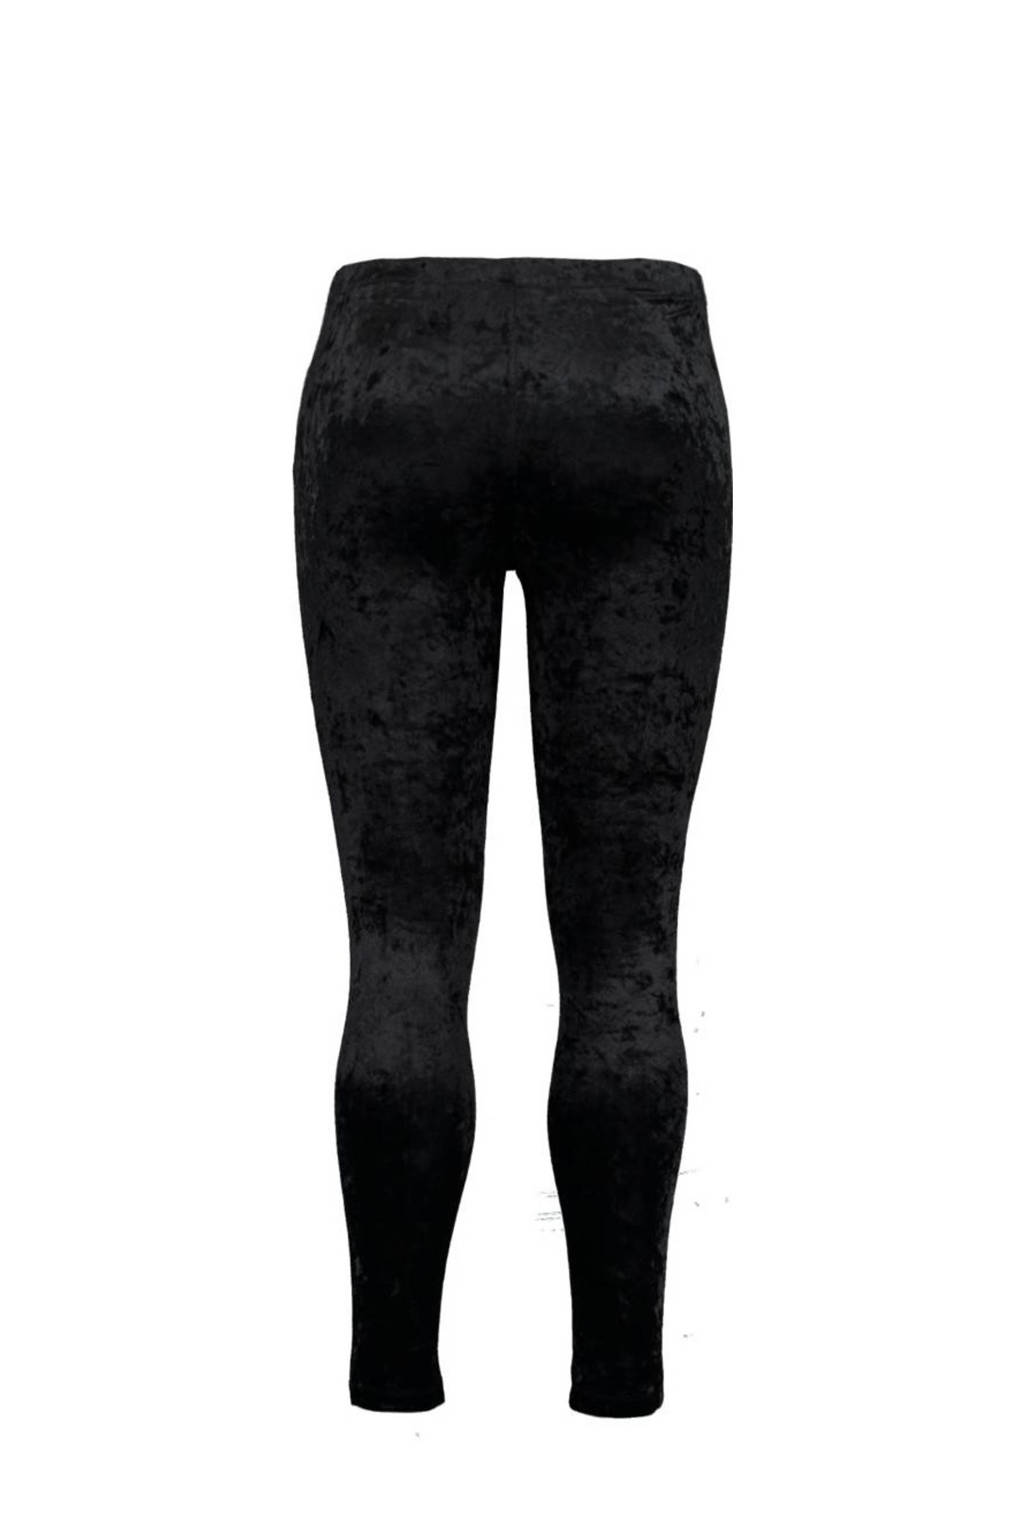 woede Outlook Mooi MS Mode fluwelen legging zwart | wehkamp